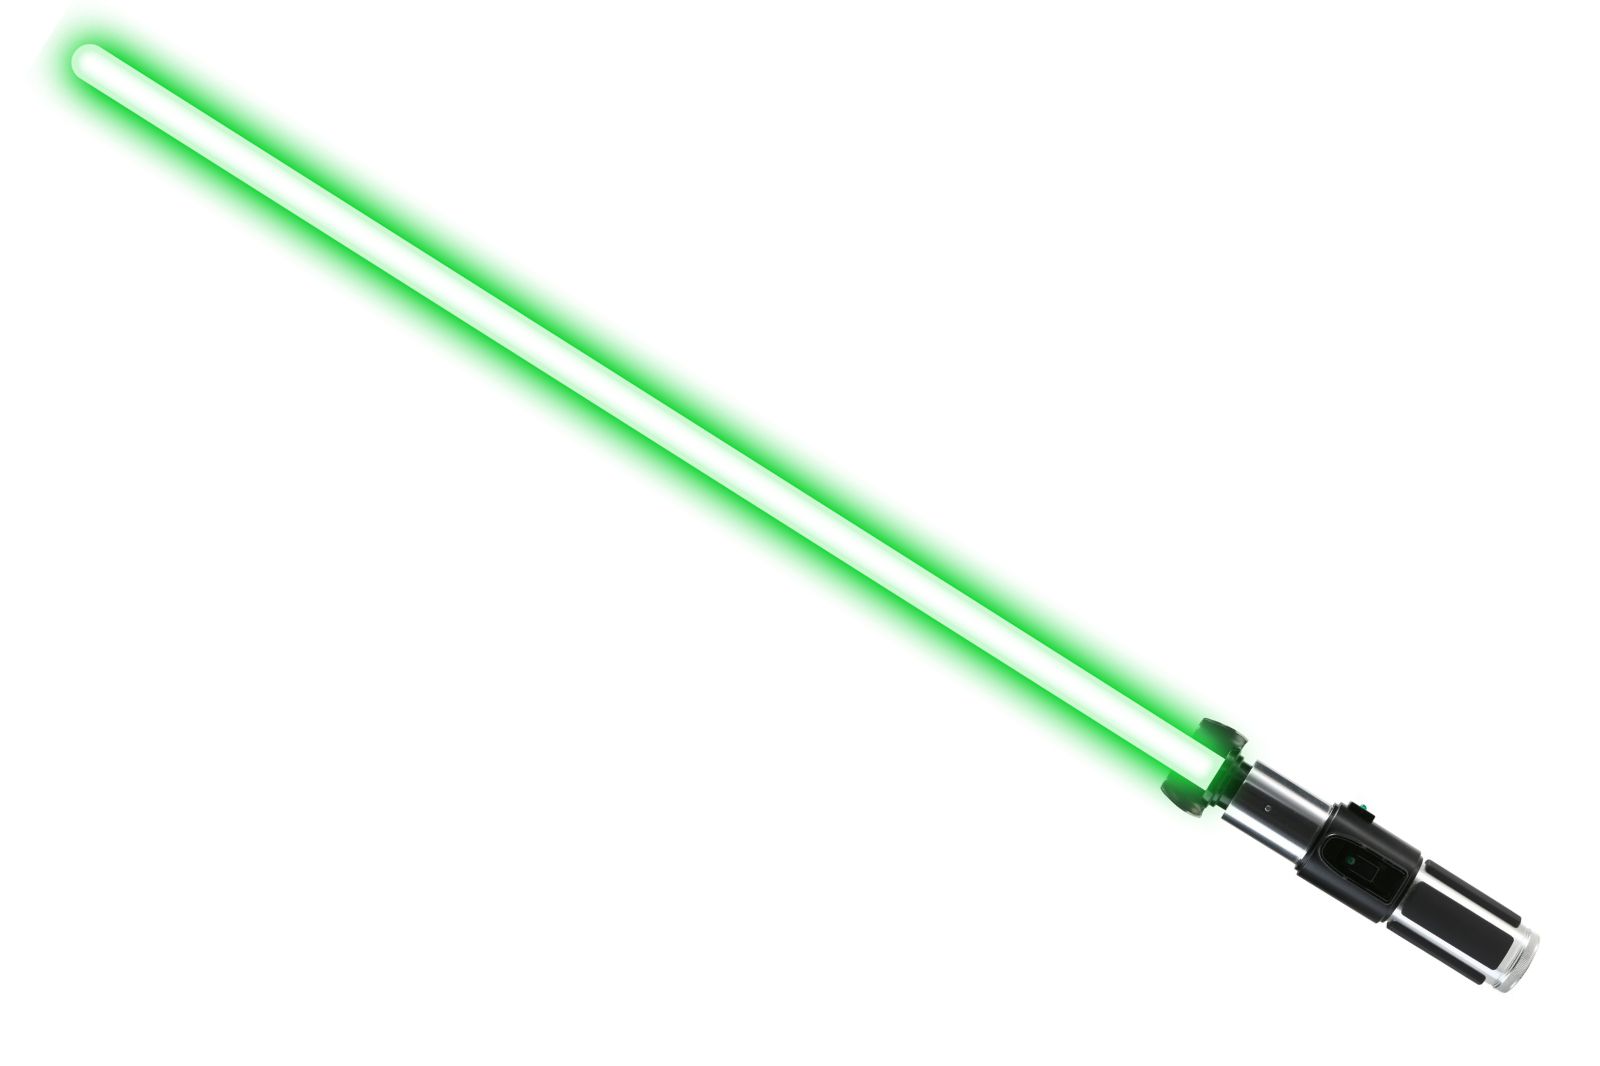 Force FX Star Wars Lightsabers image 1